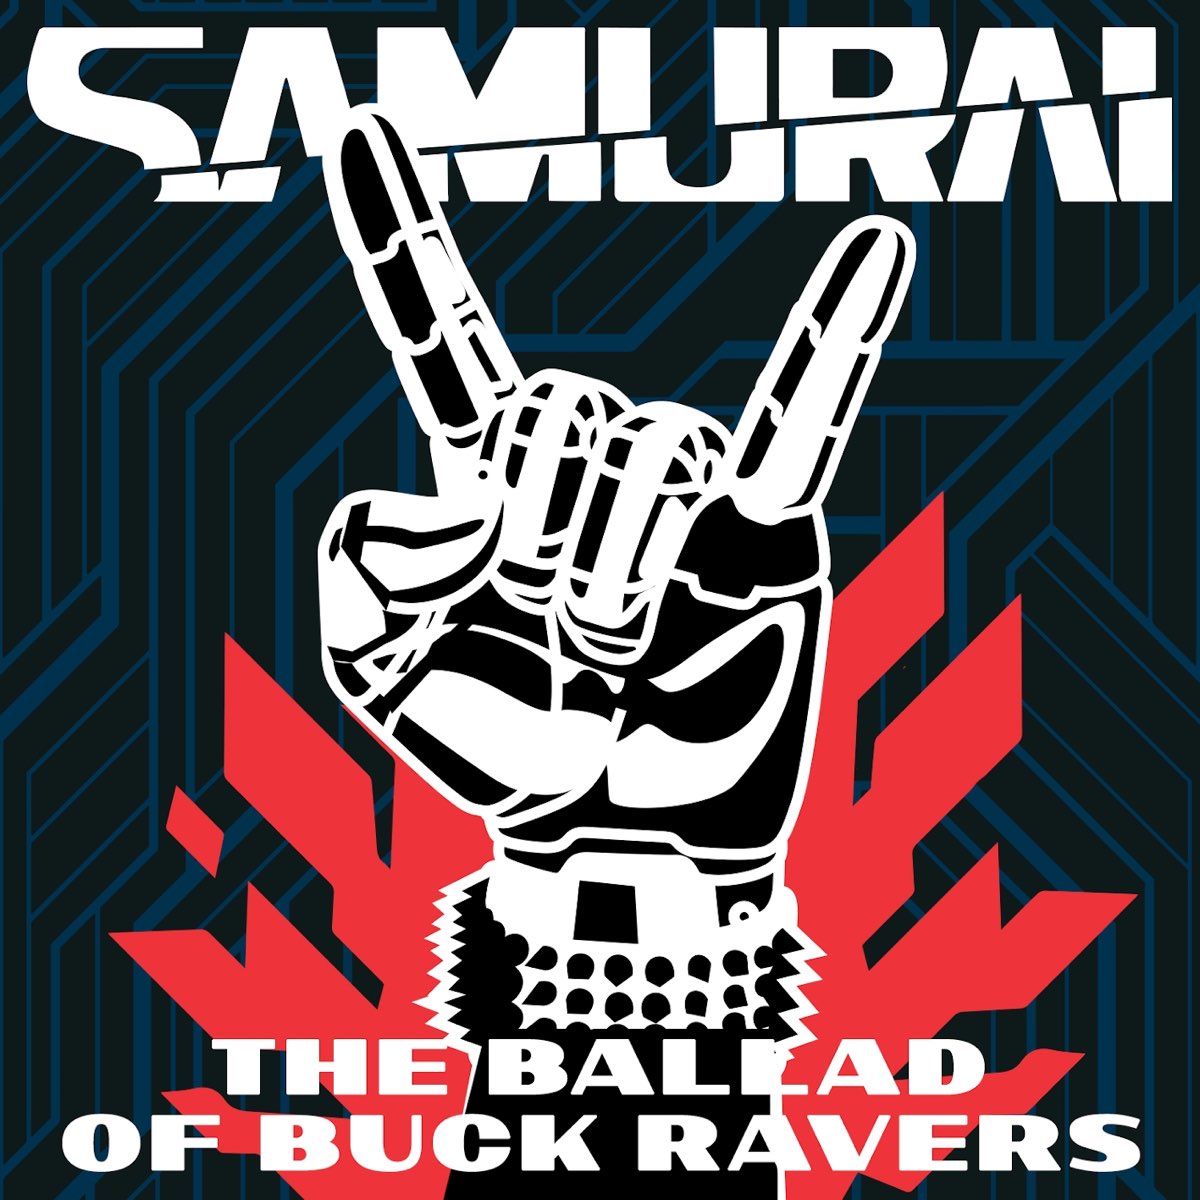 Samurai группа cyberpunk мерч фото 72